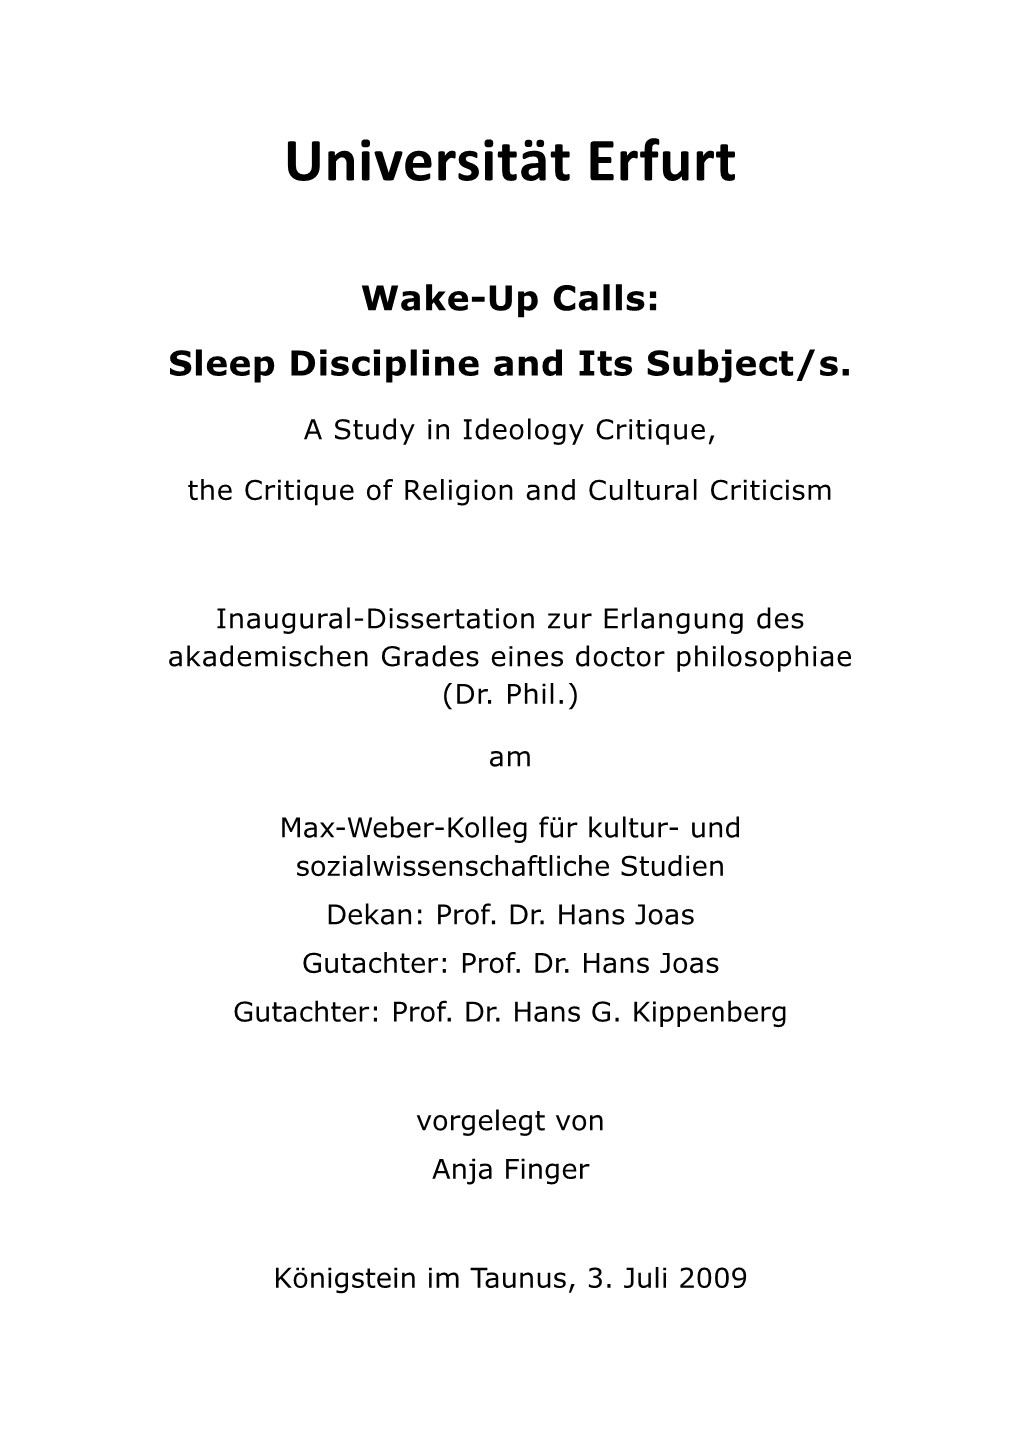 Wake-Up Calls: Sleep Discipline and Its Subject/S